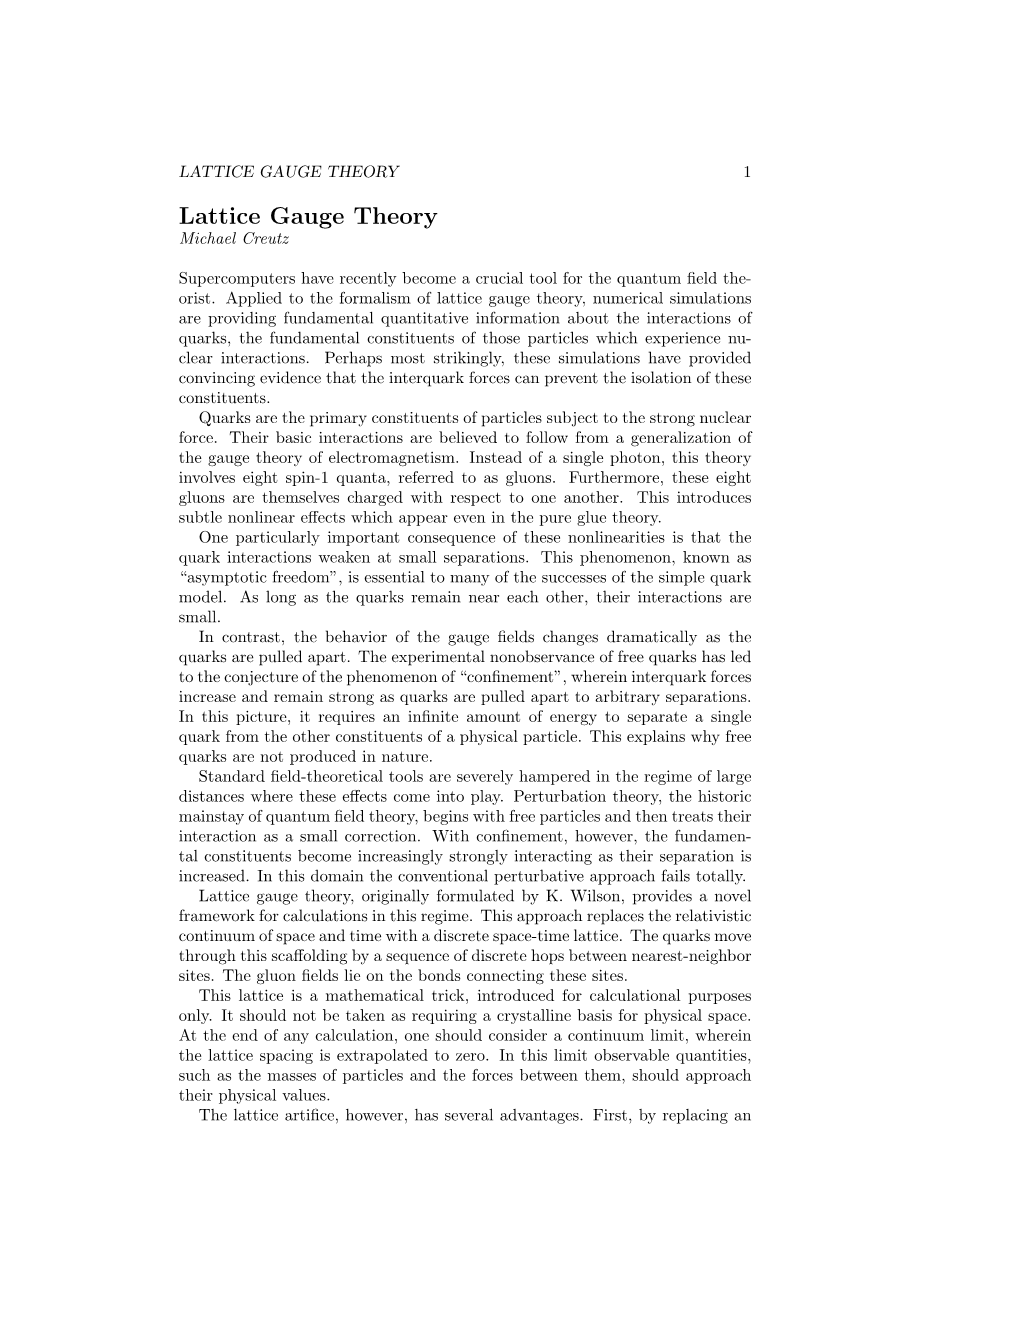 Lattice Gauge Theory 1